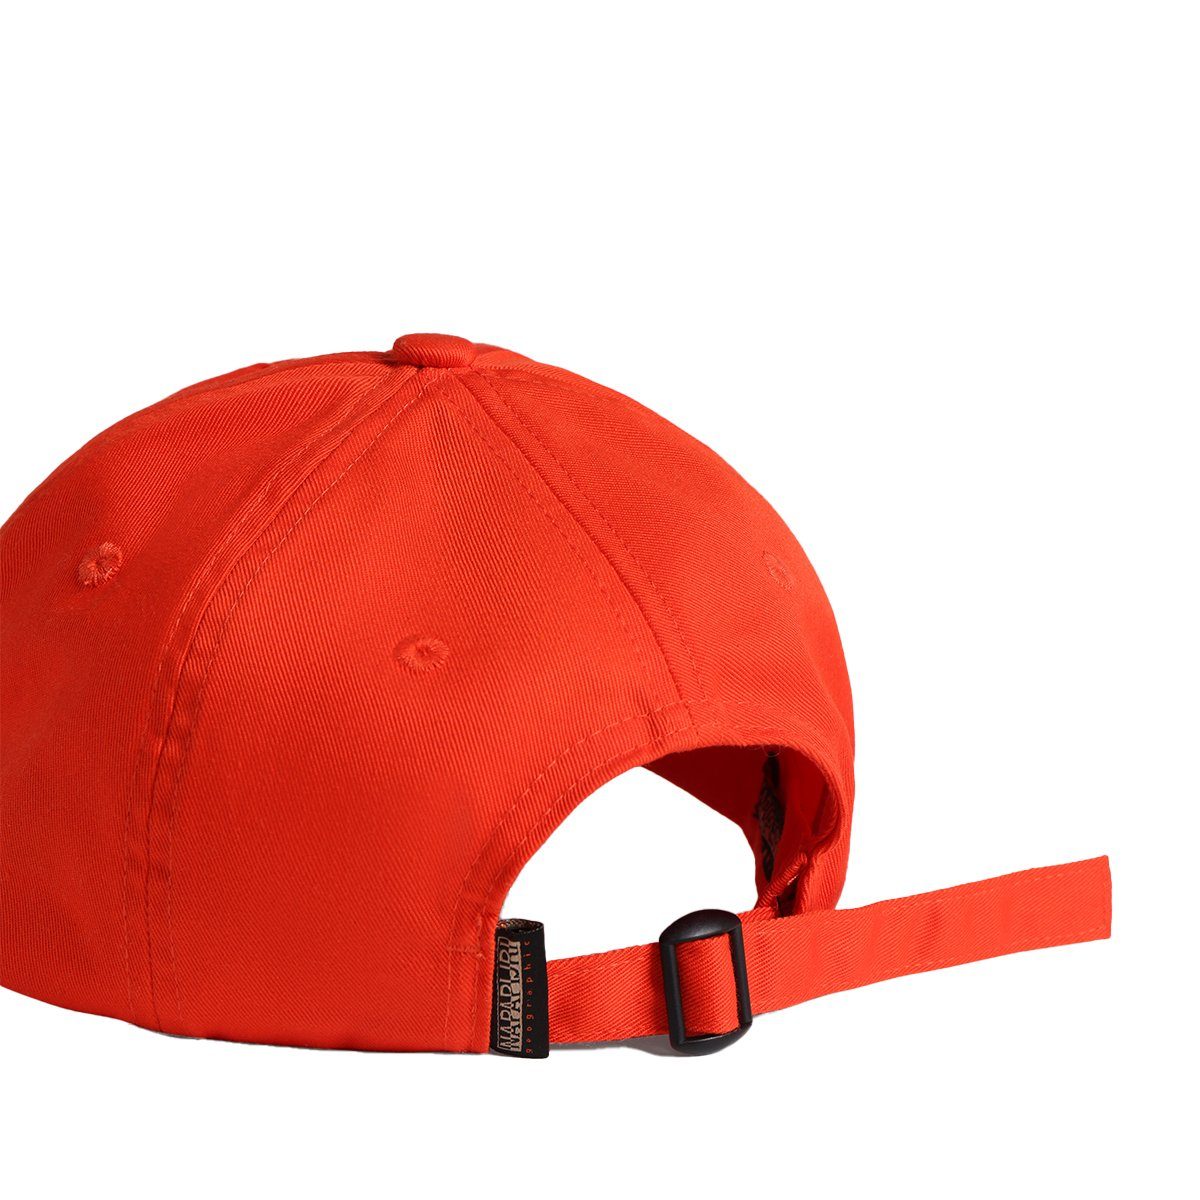 Napapijri Red Baseball Cap Cherry(R051)